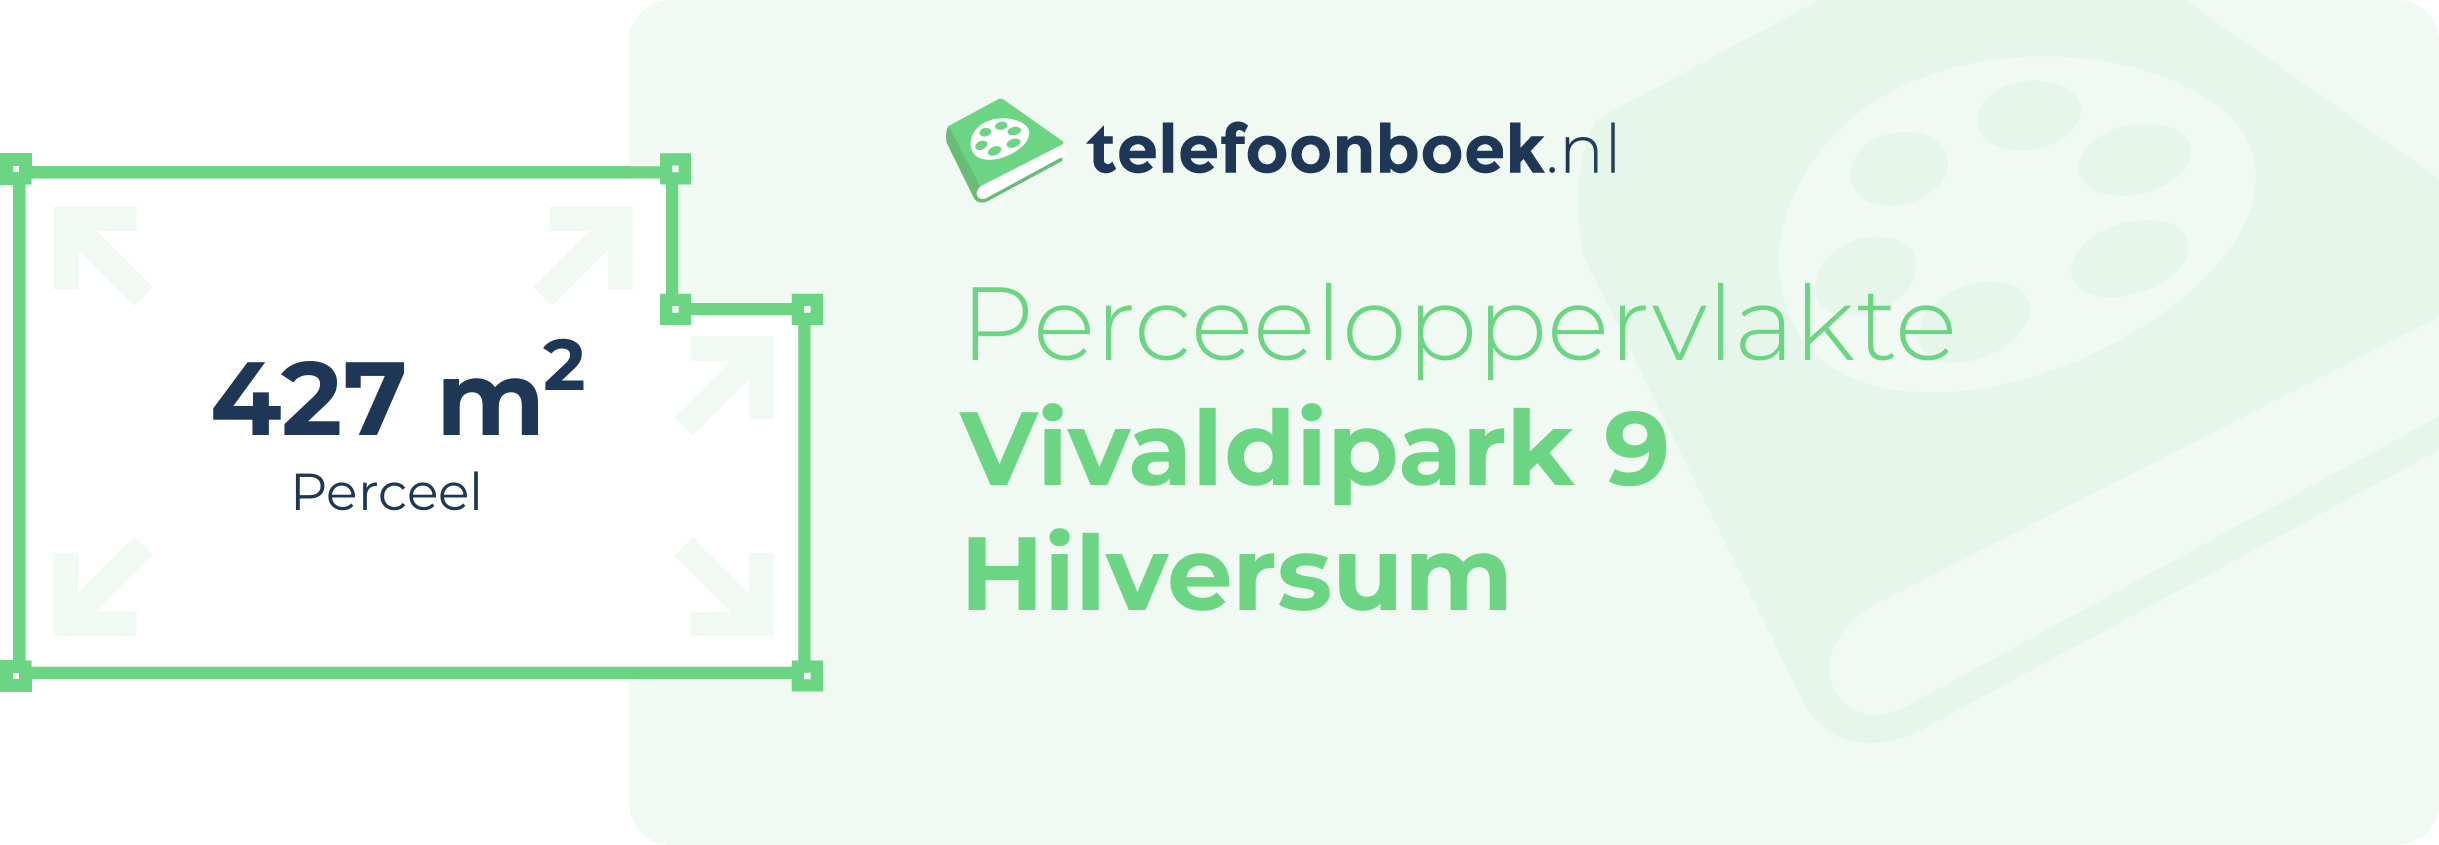 Perceeloppervlakte Vivaldipark 9 Hilversum